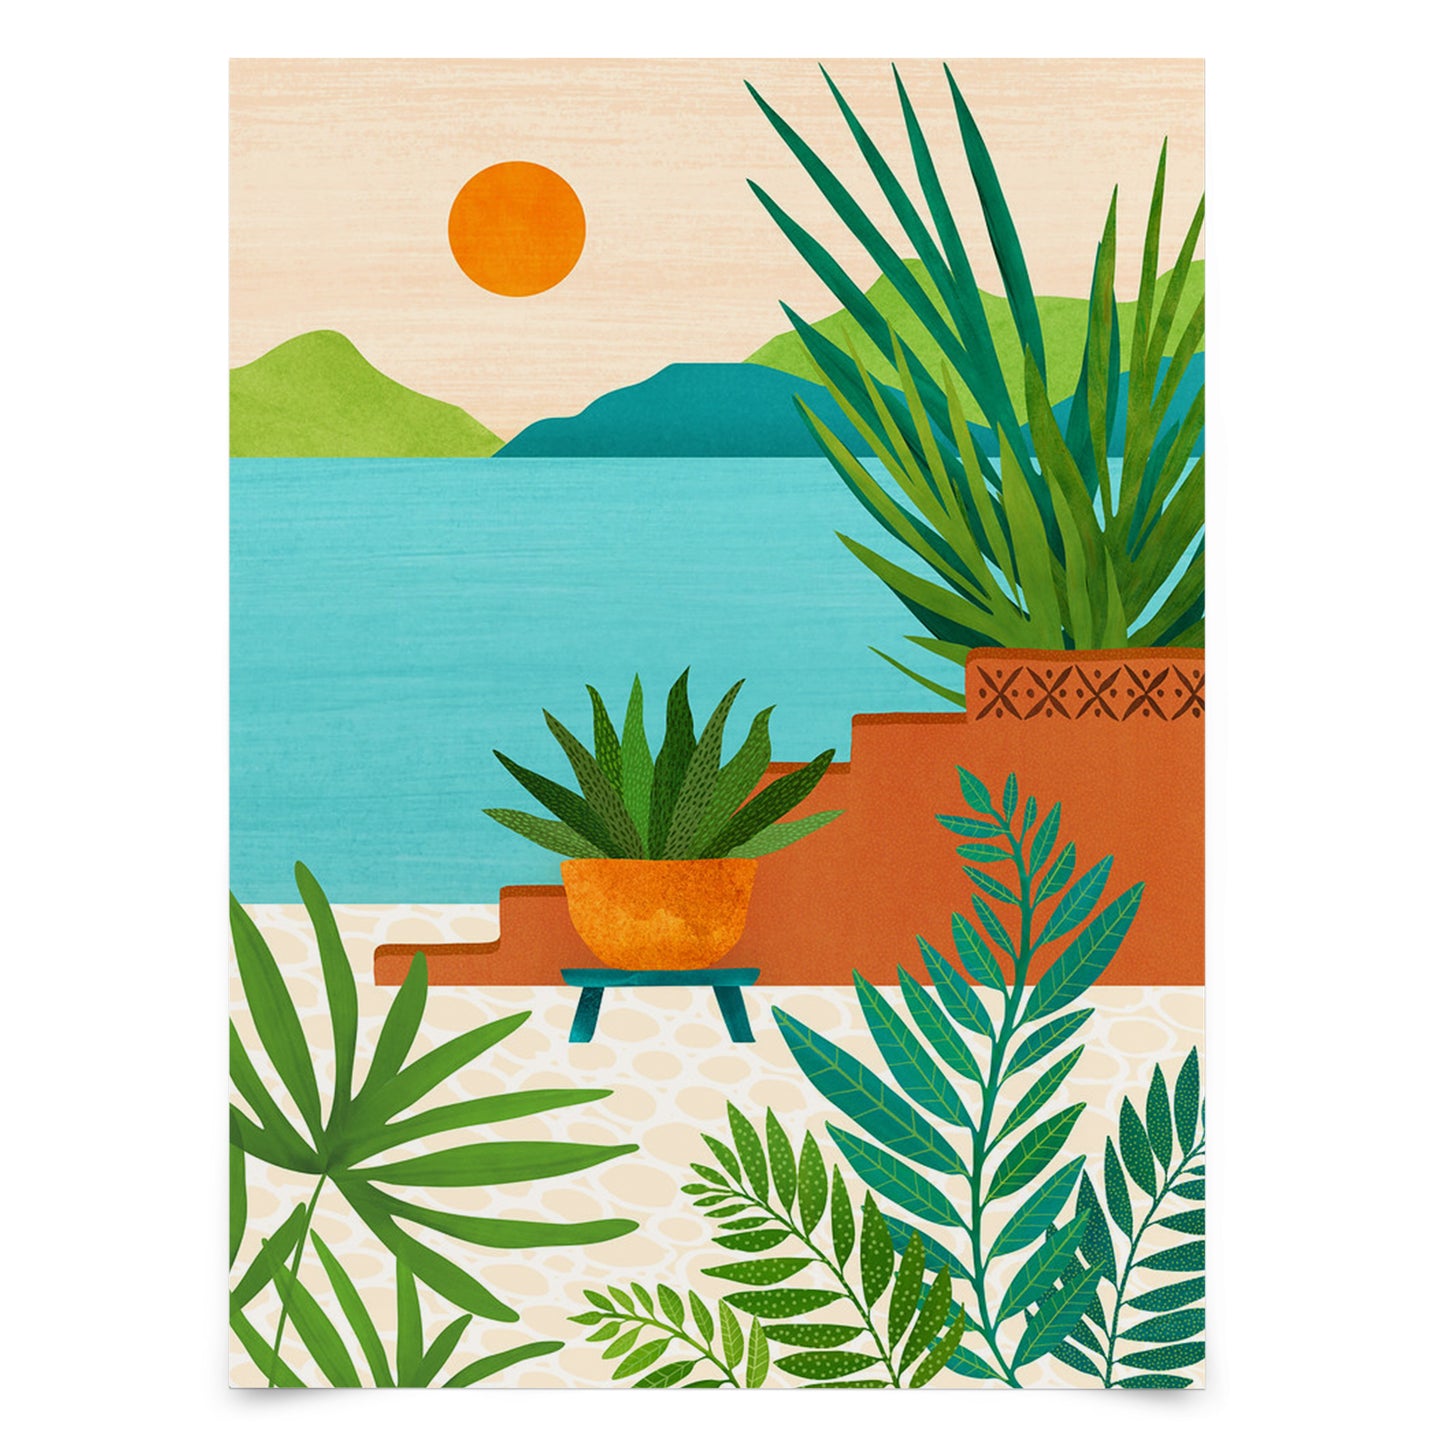 5 Piece Poster Gallery Wall Art Set - Tropical Sun Nature Peace - Print